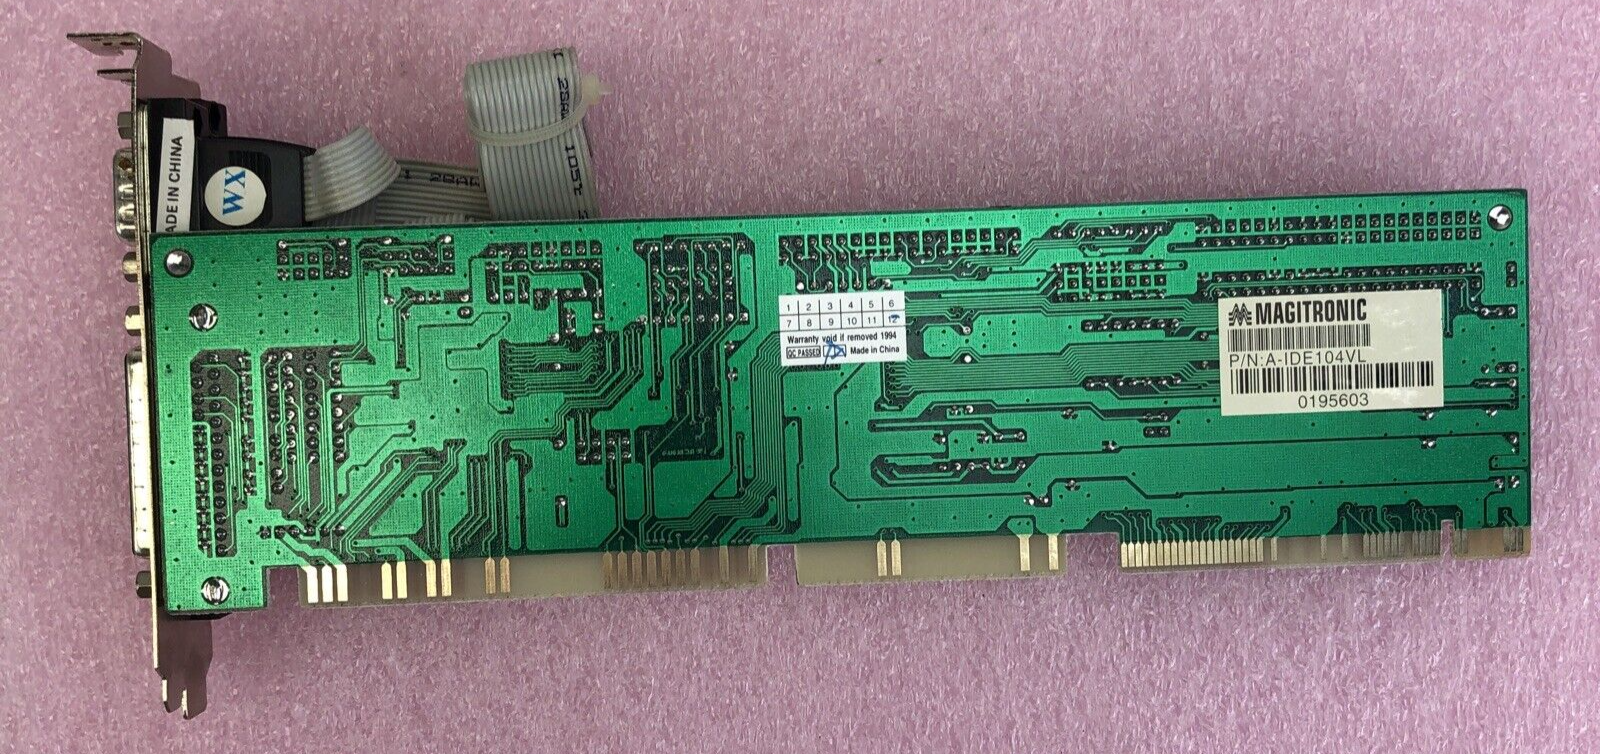 Magitronic A-IDE104VL VGA ParallelPort RS232 DB-25 Video Card